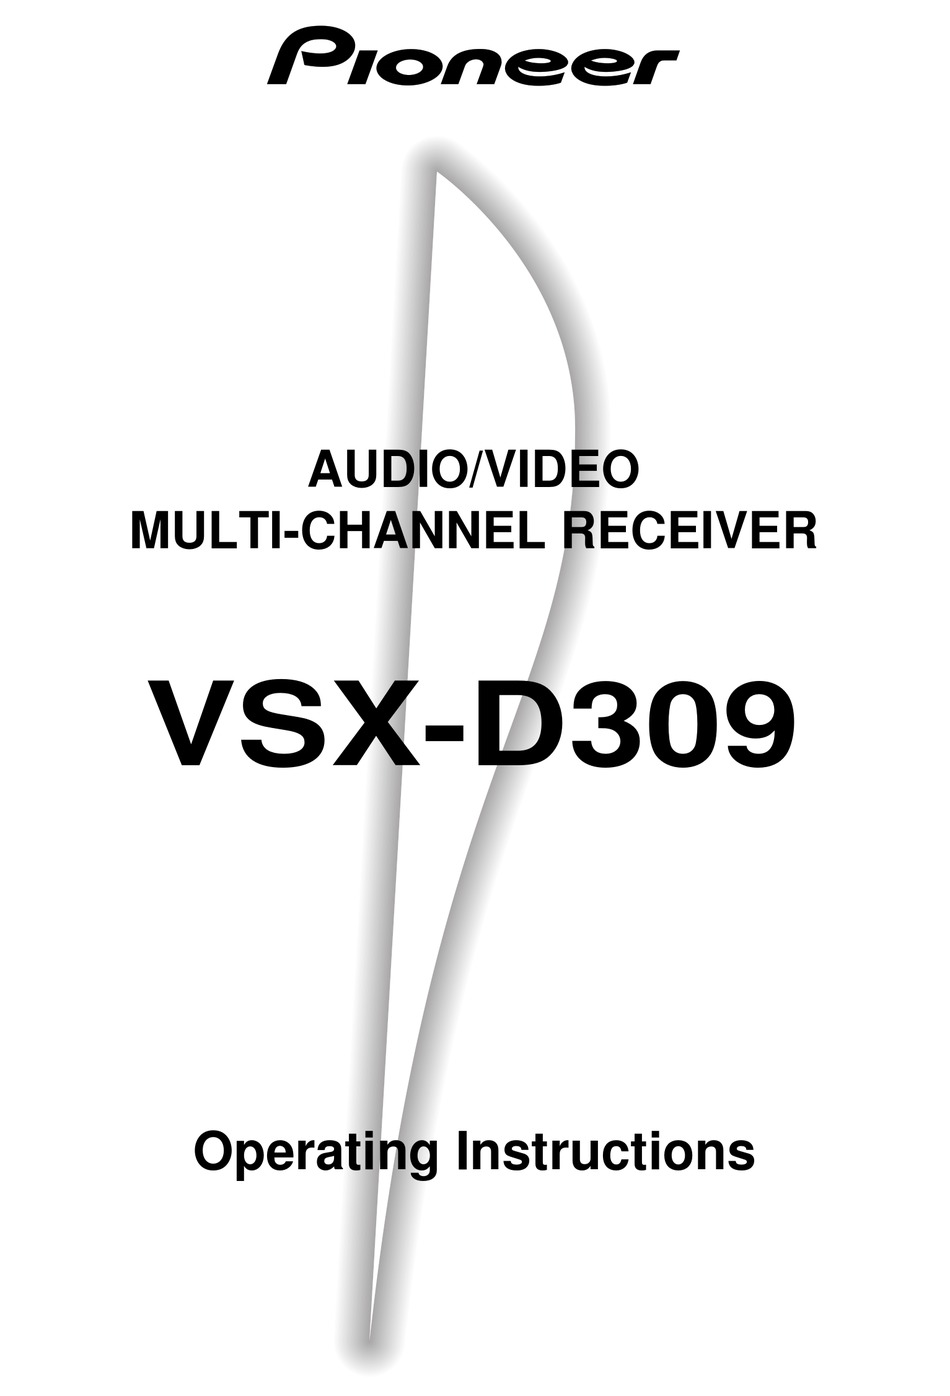 PIONEER VSX-D309 OPERATING INSTRUCTIONS MANUAL Pdf Download | ManualsLib